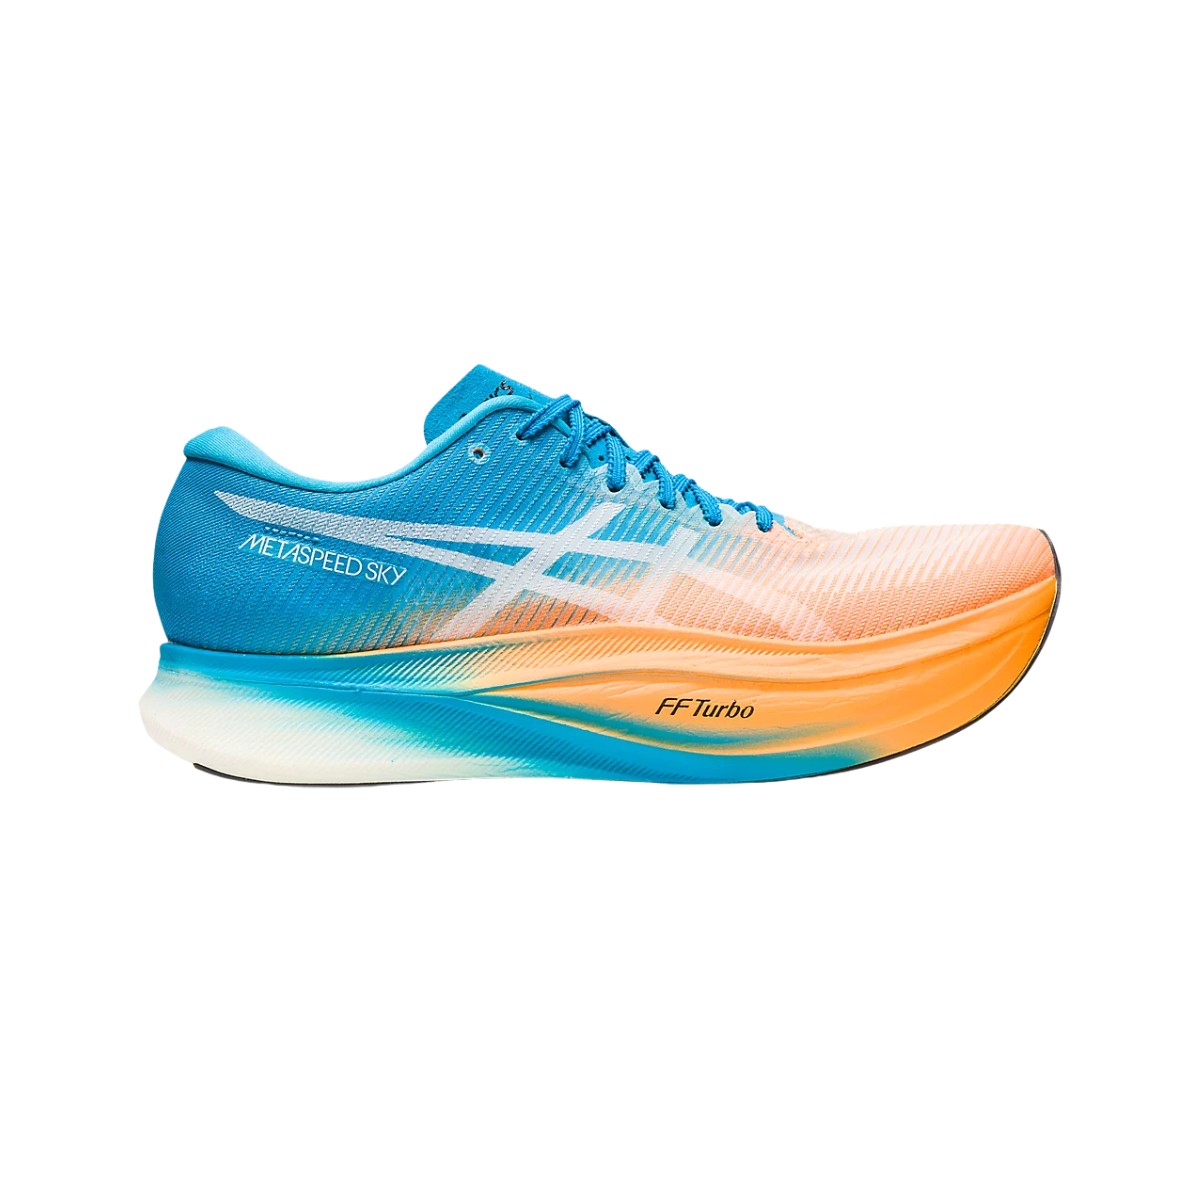 Schuhe Asics Metaspeed Sky+ Blau Orange, Größe 42 - EUR